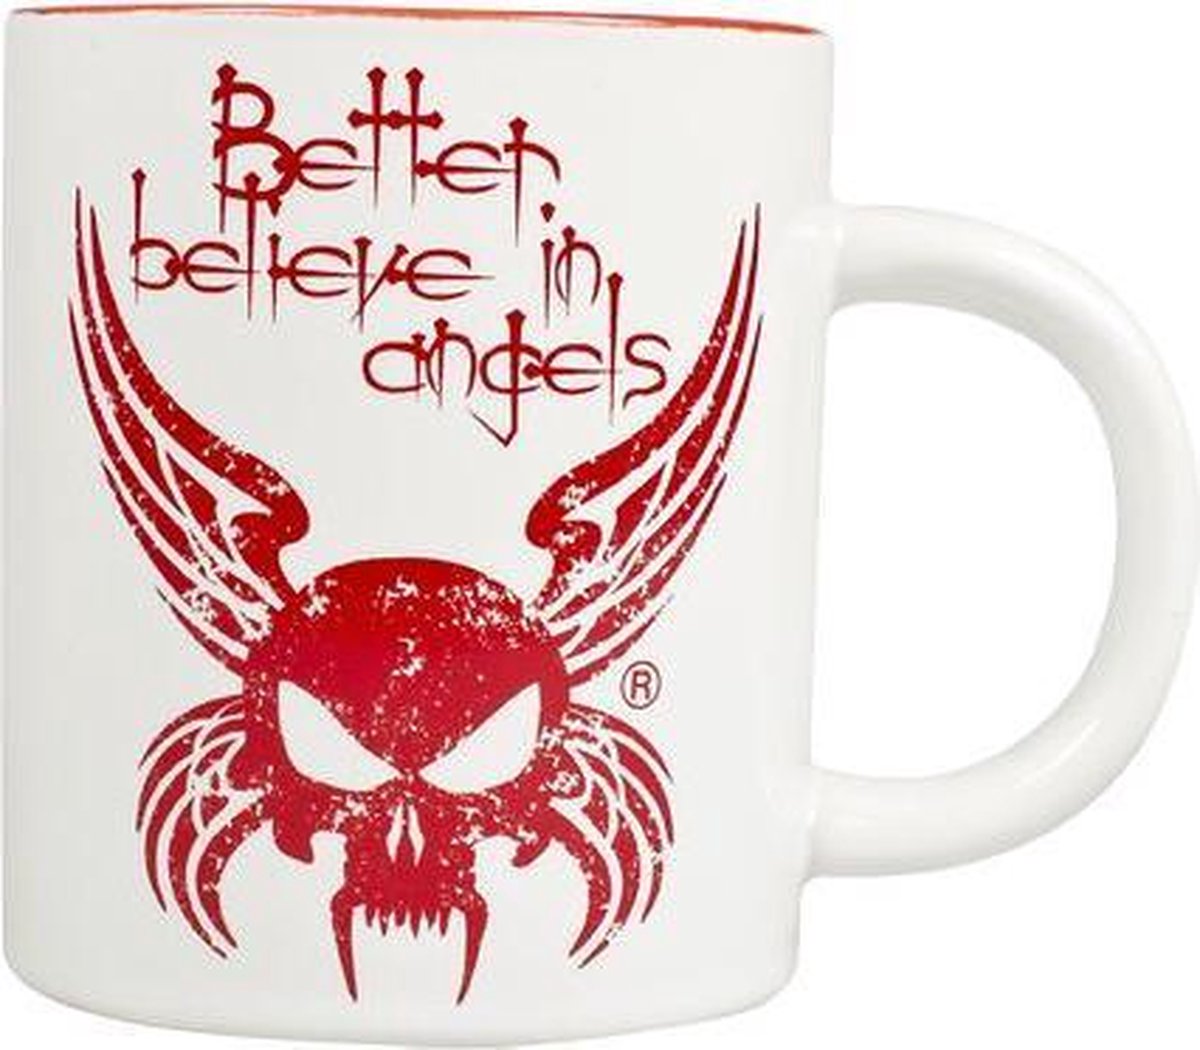 6x Koffie mok - Better believe in angels - Set van 6 stuks - Koffiemok 330 ml